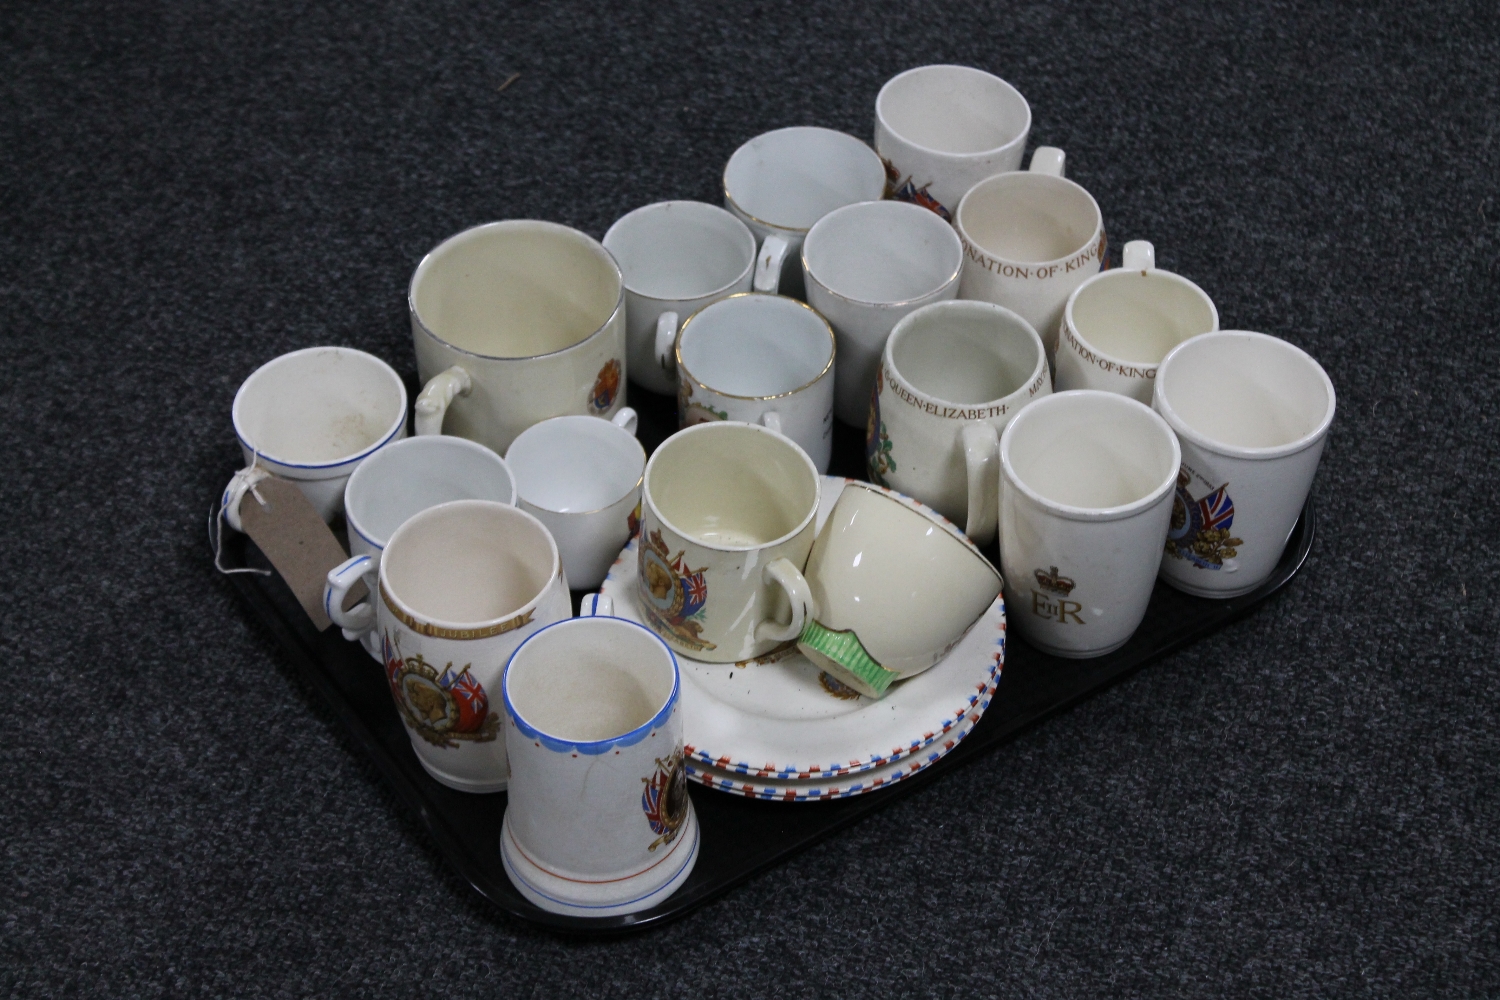 A tray of a quantity of commemorative tea china